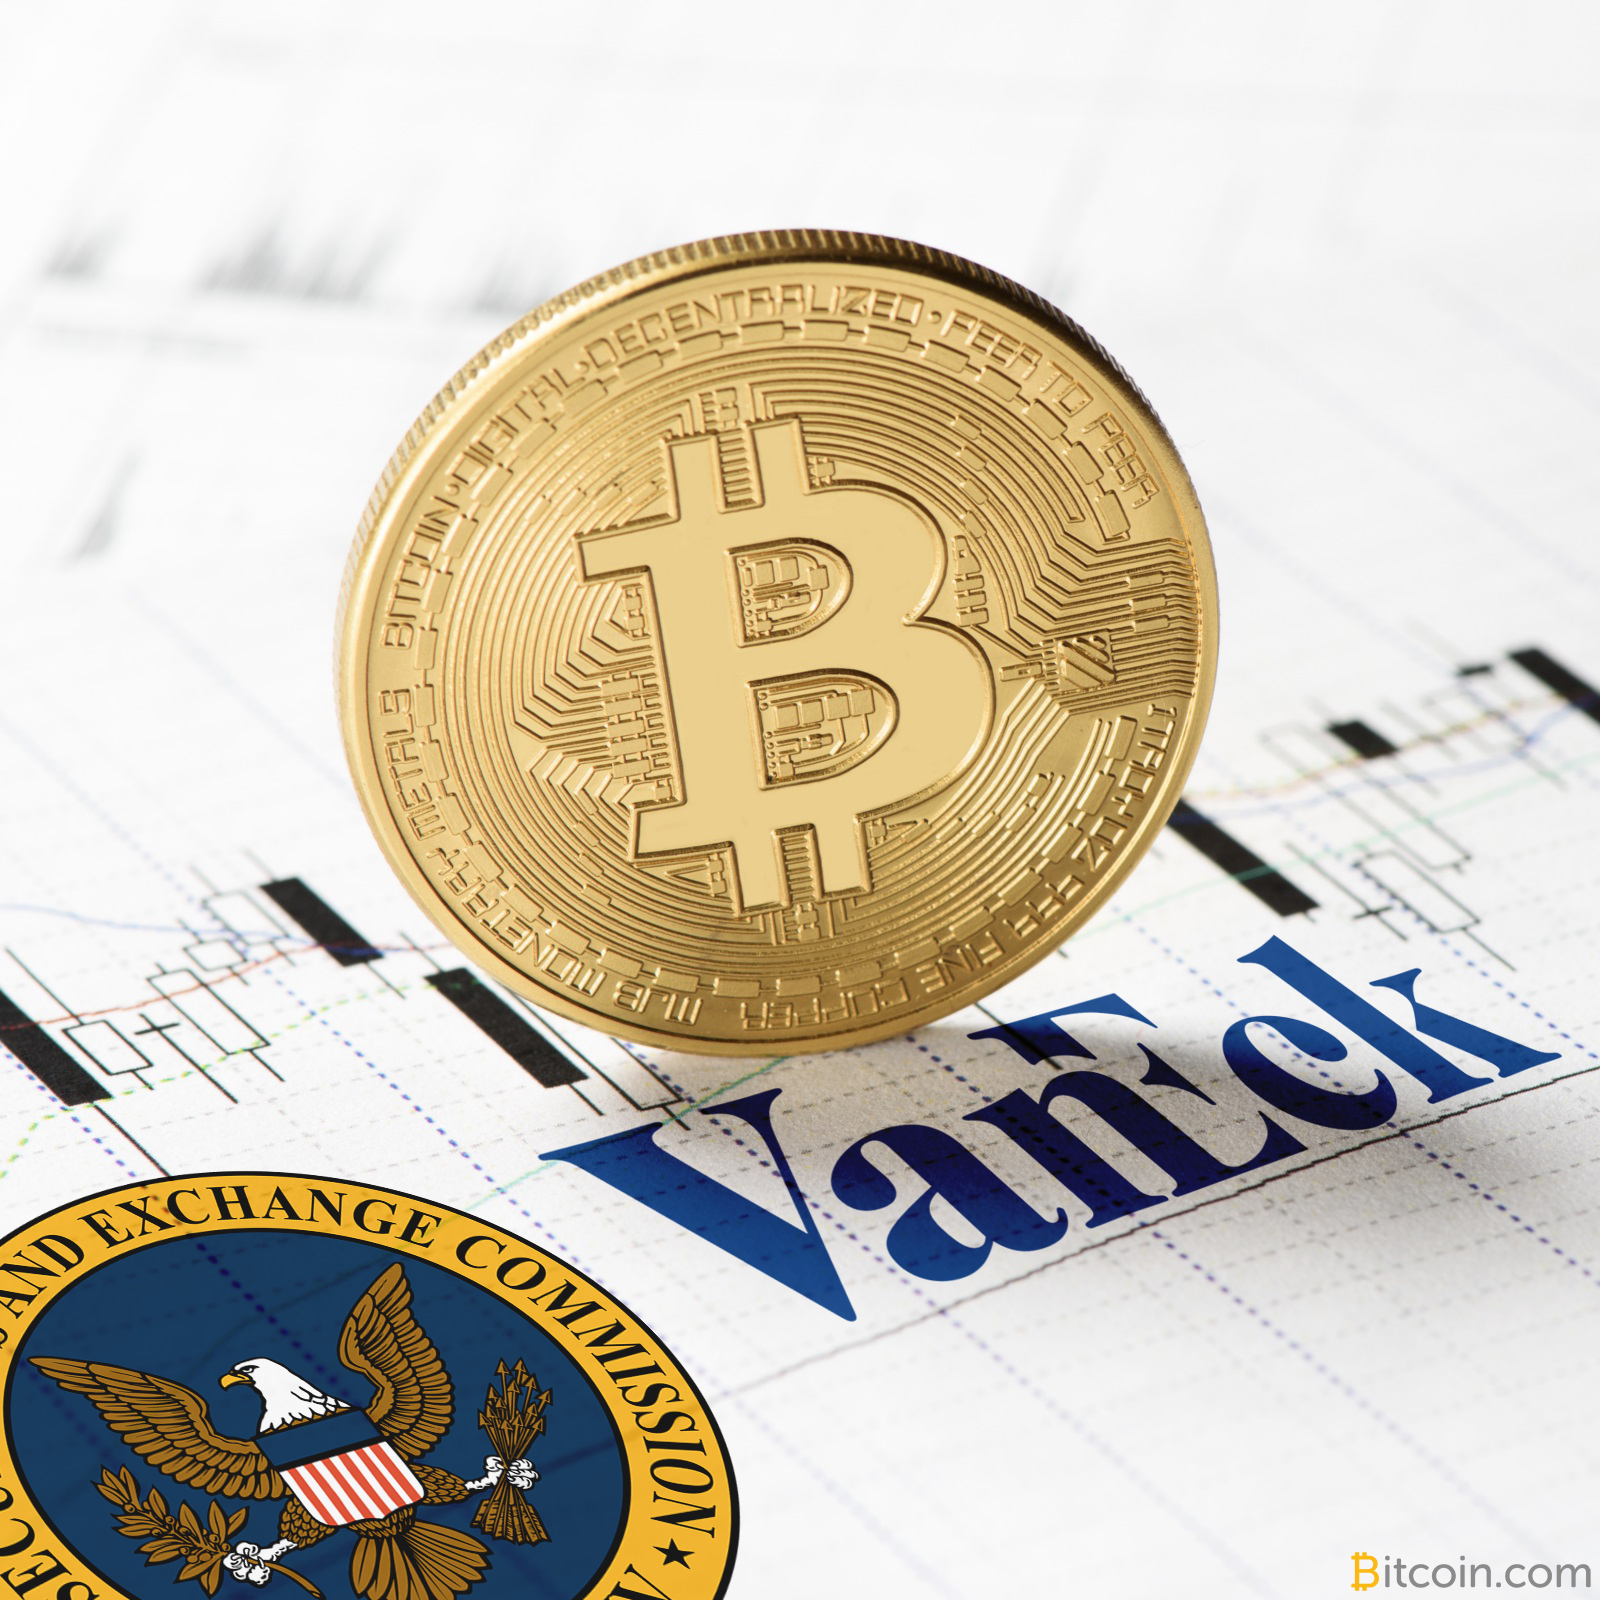 vaneck bitcoin strategy etf